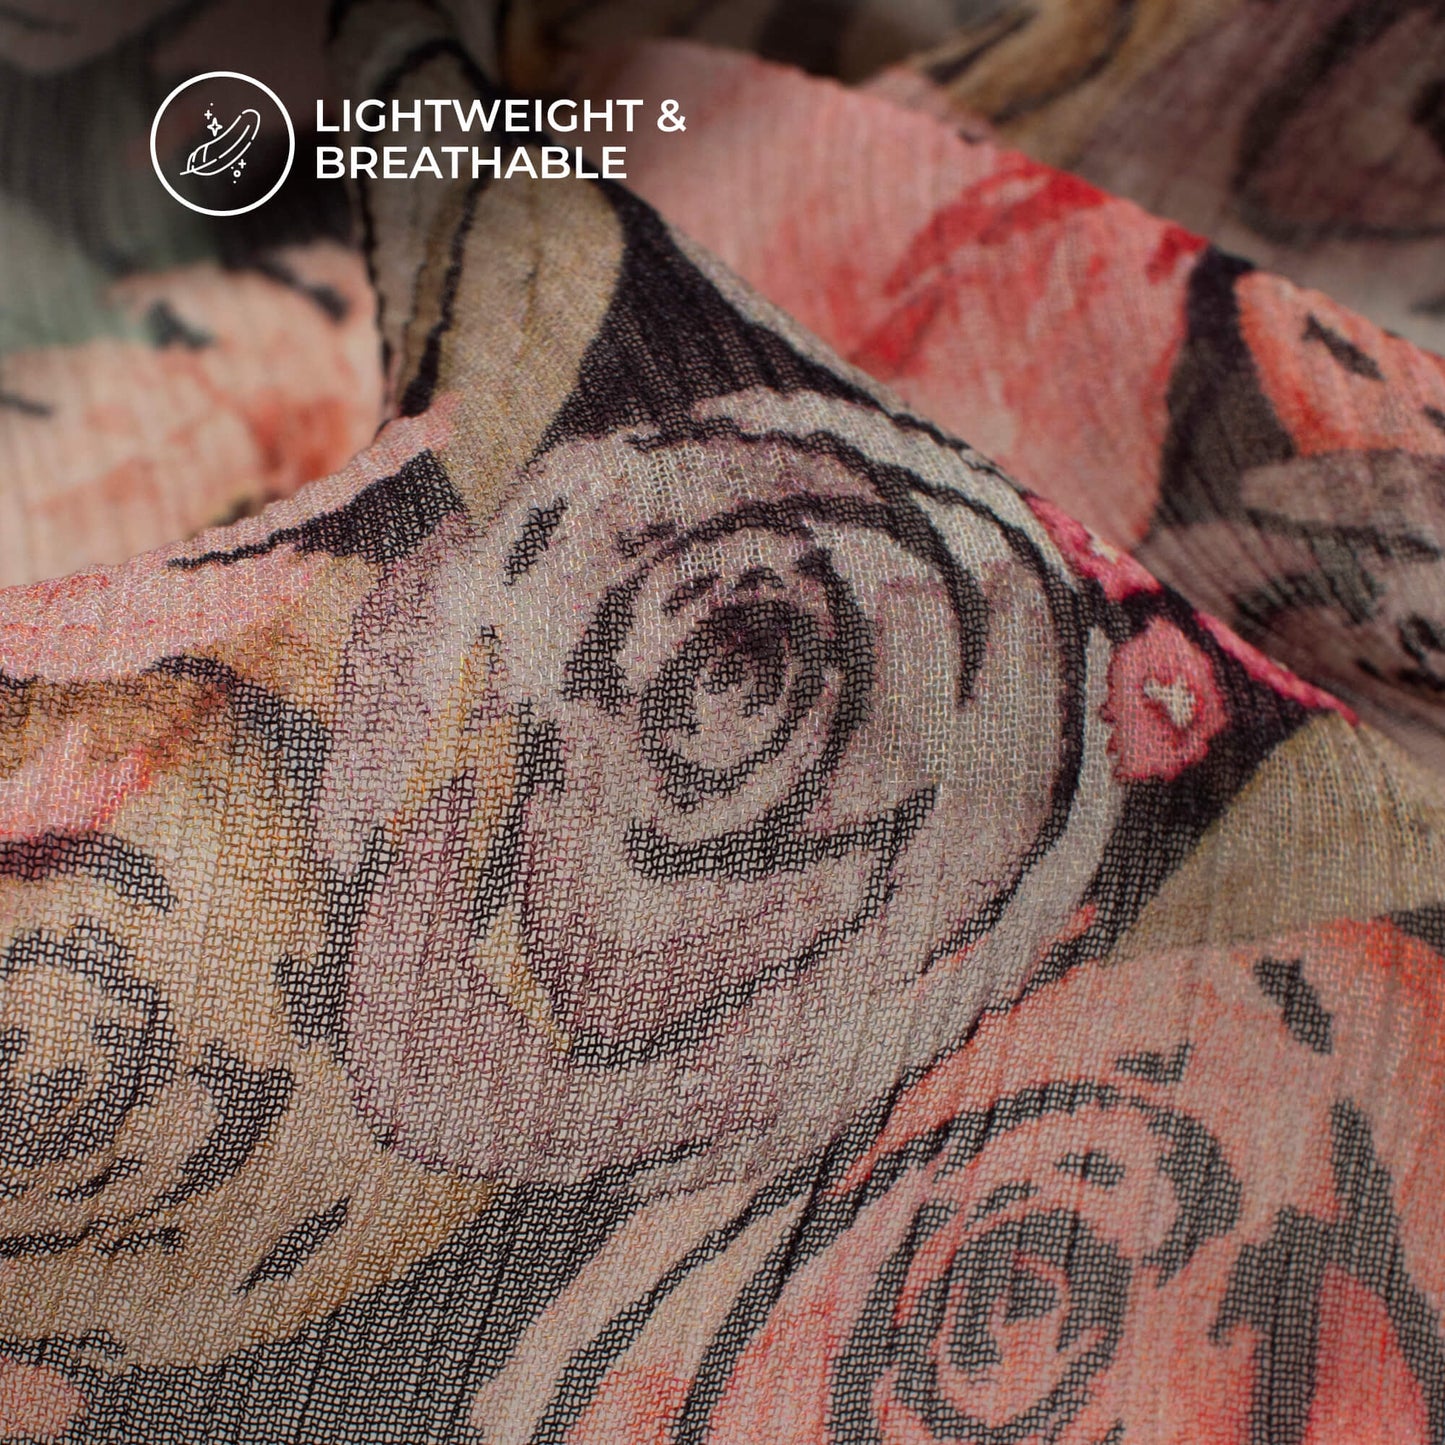 Light Pink Floral Digital Print Bemberg Chiffon Fabric